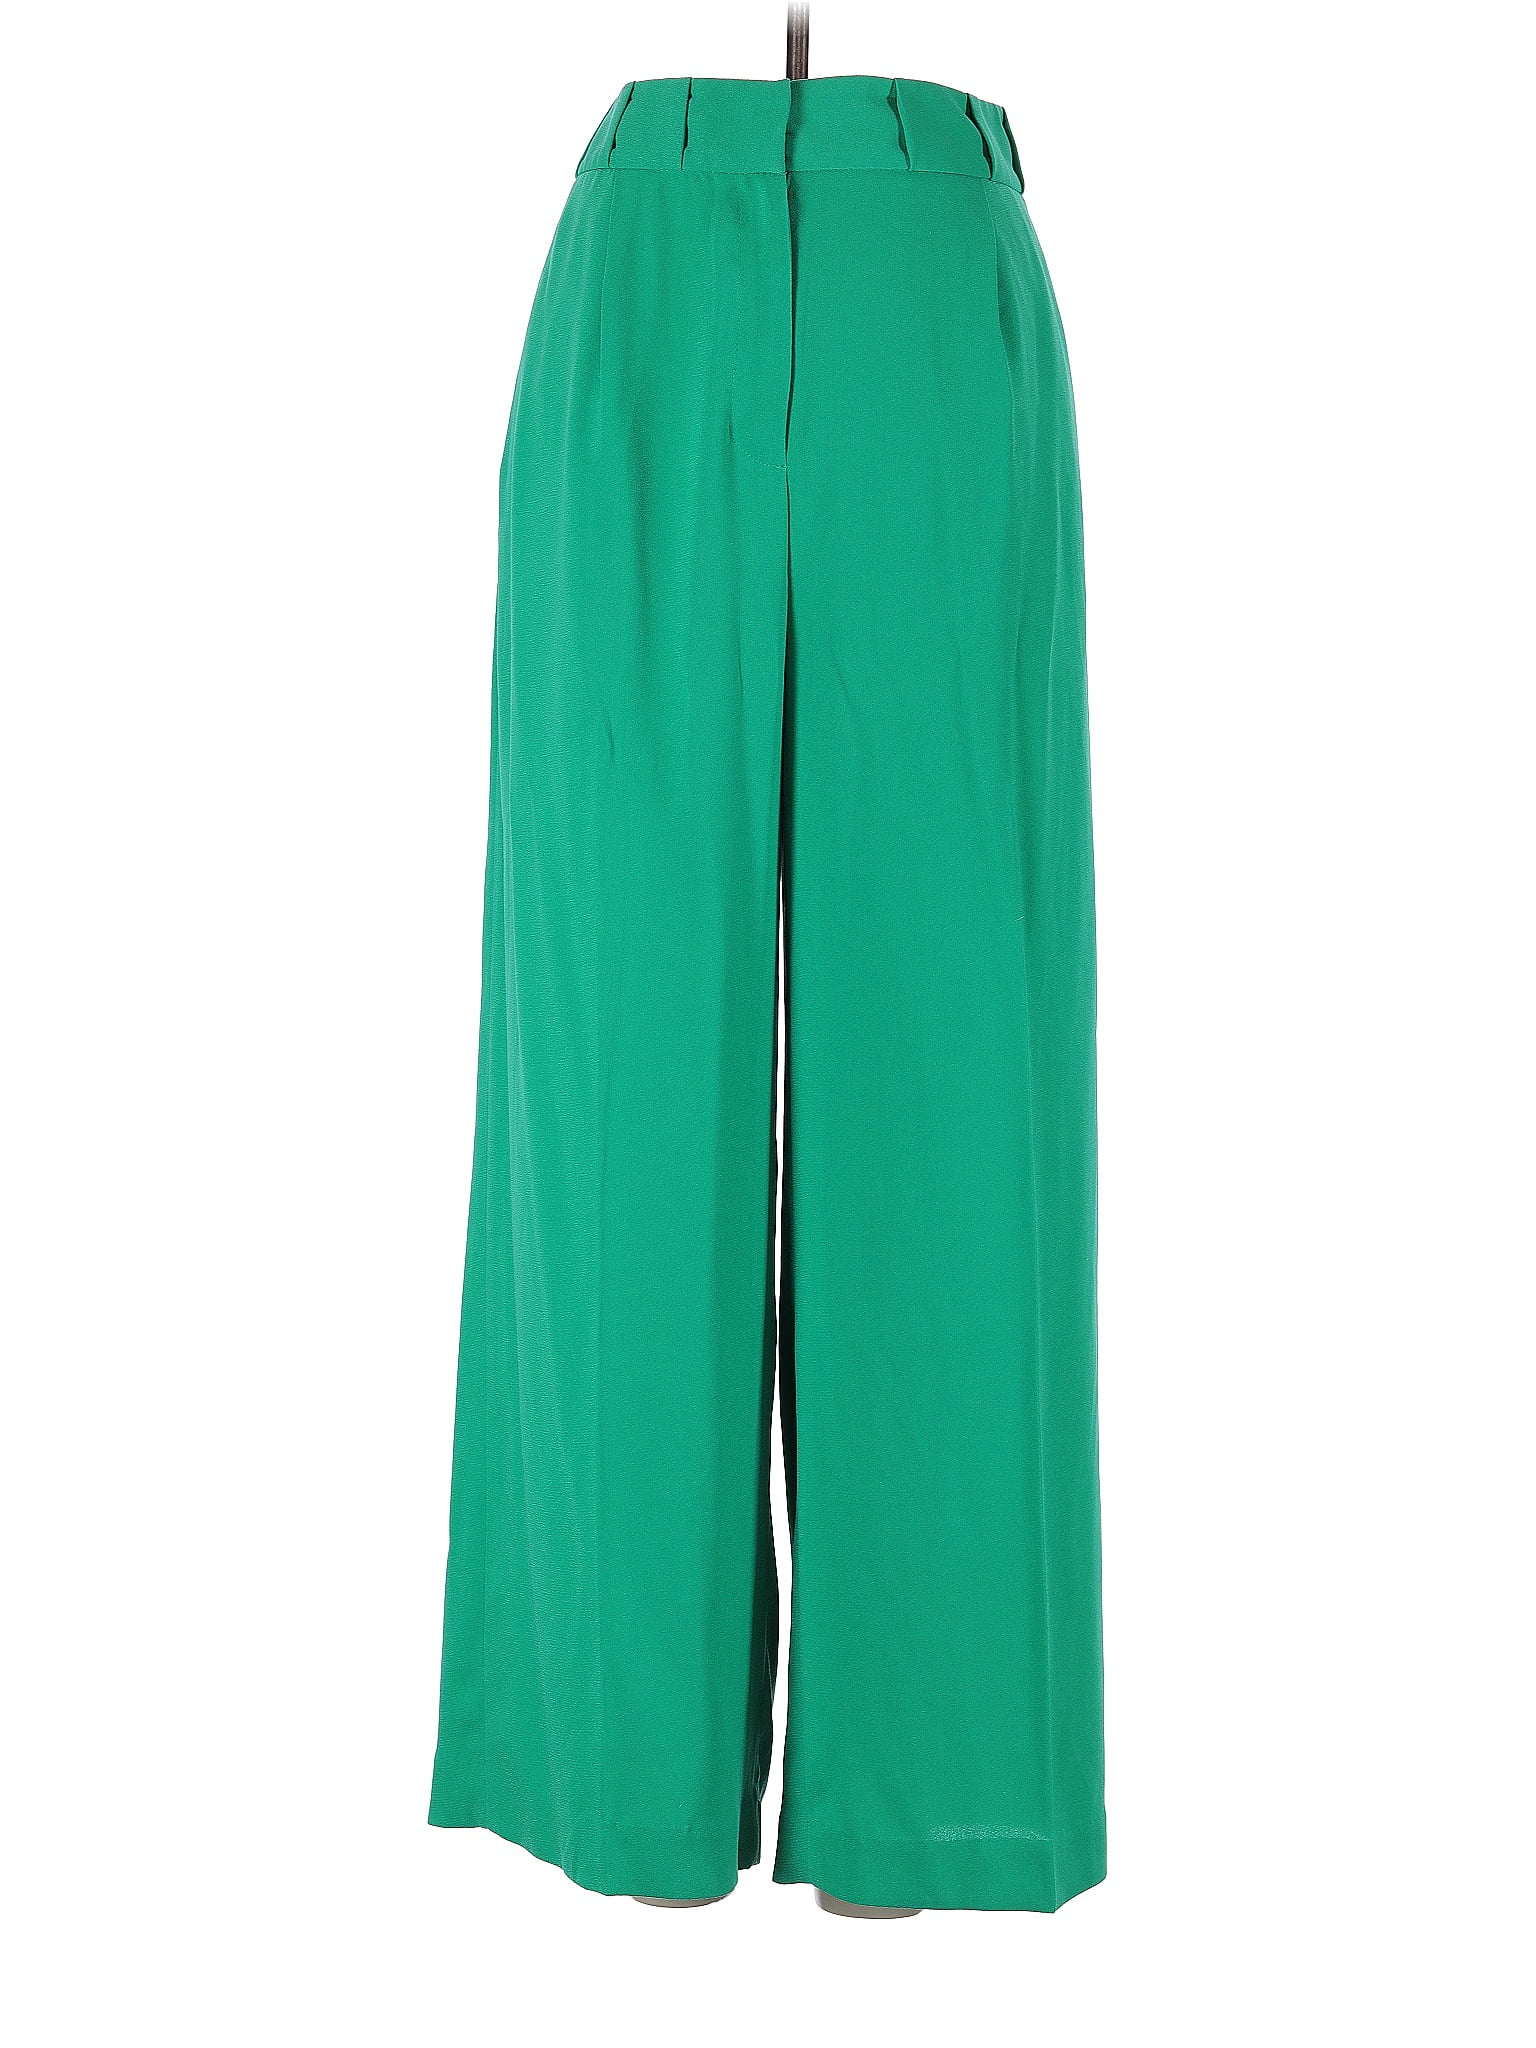 Halogen X Atlantic-Pacific 100% Polyester Green Dress Pants Size 6 - 77 ...